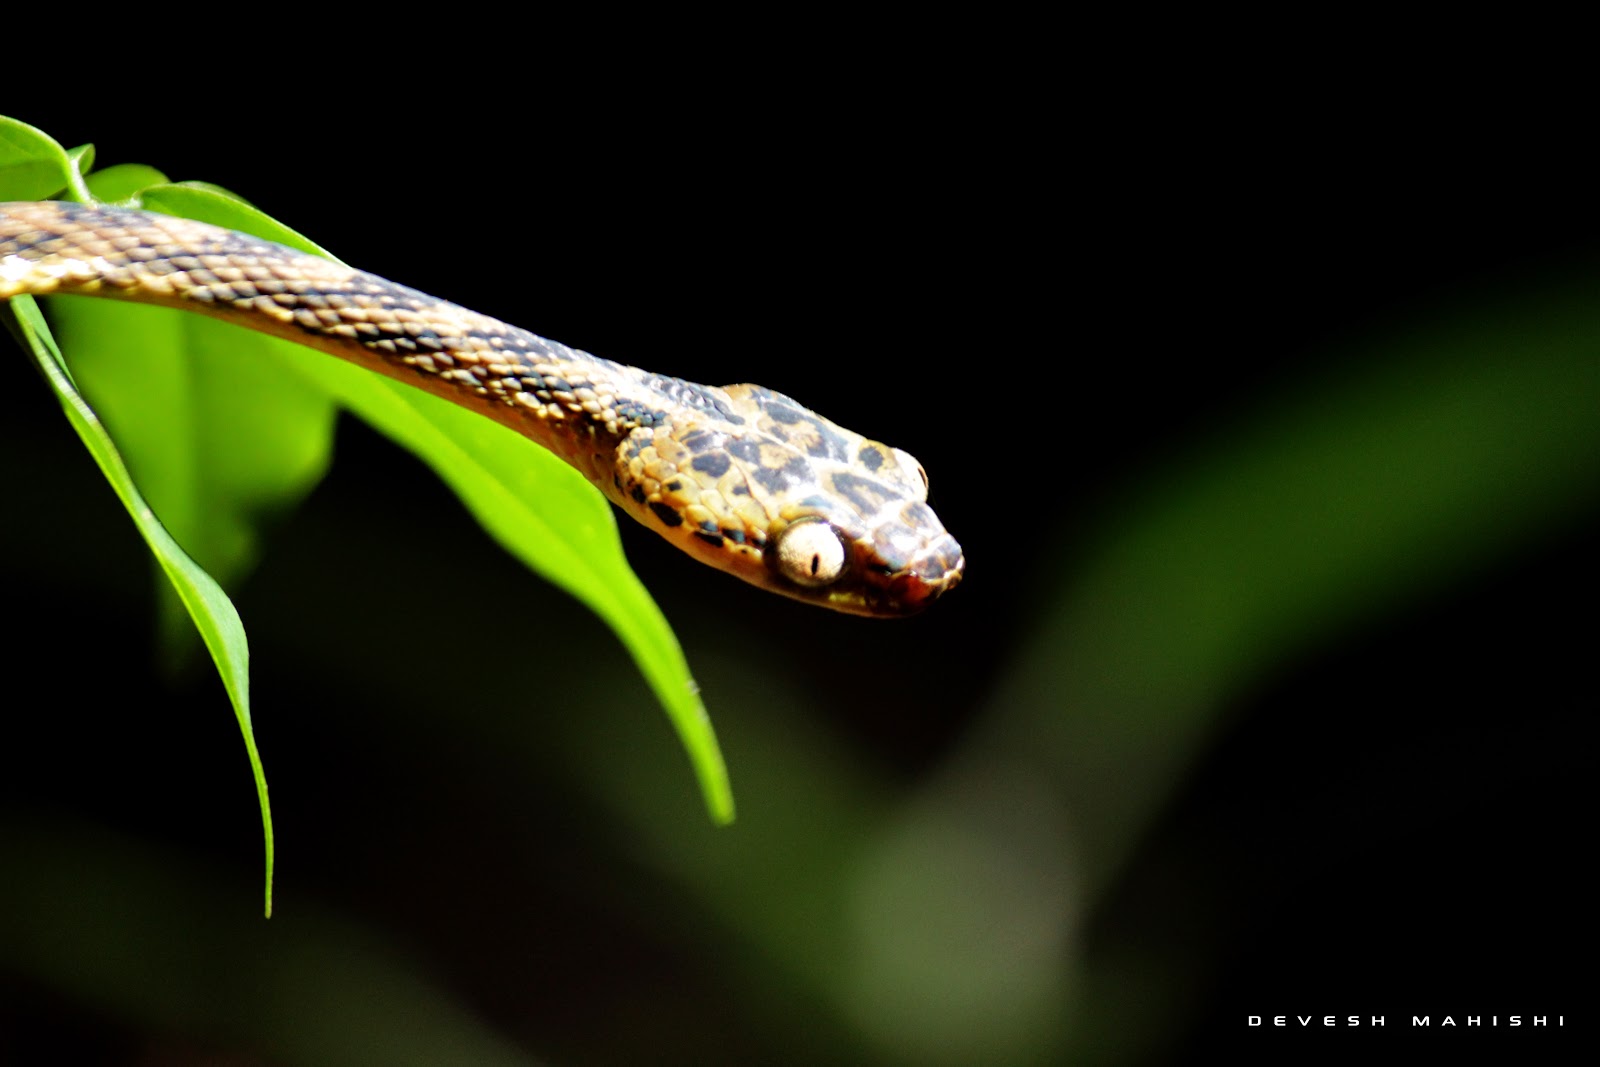 bronze tree snake karnataka, biodiversity western ghats